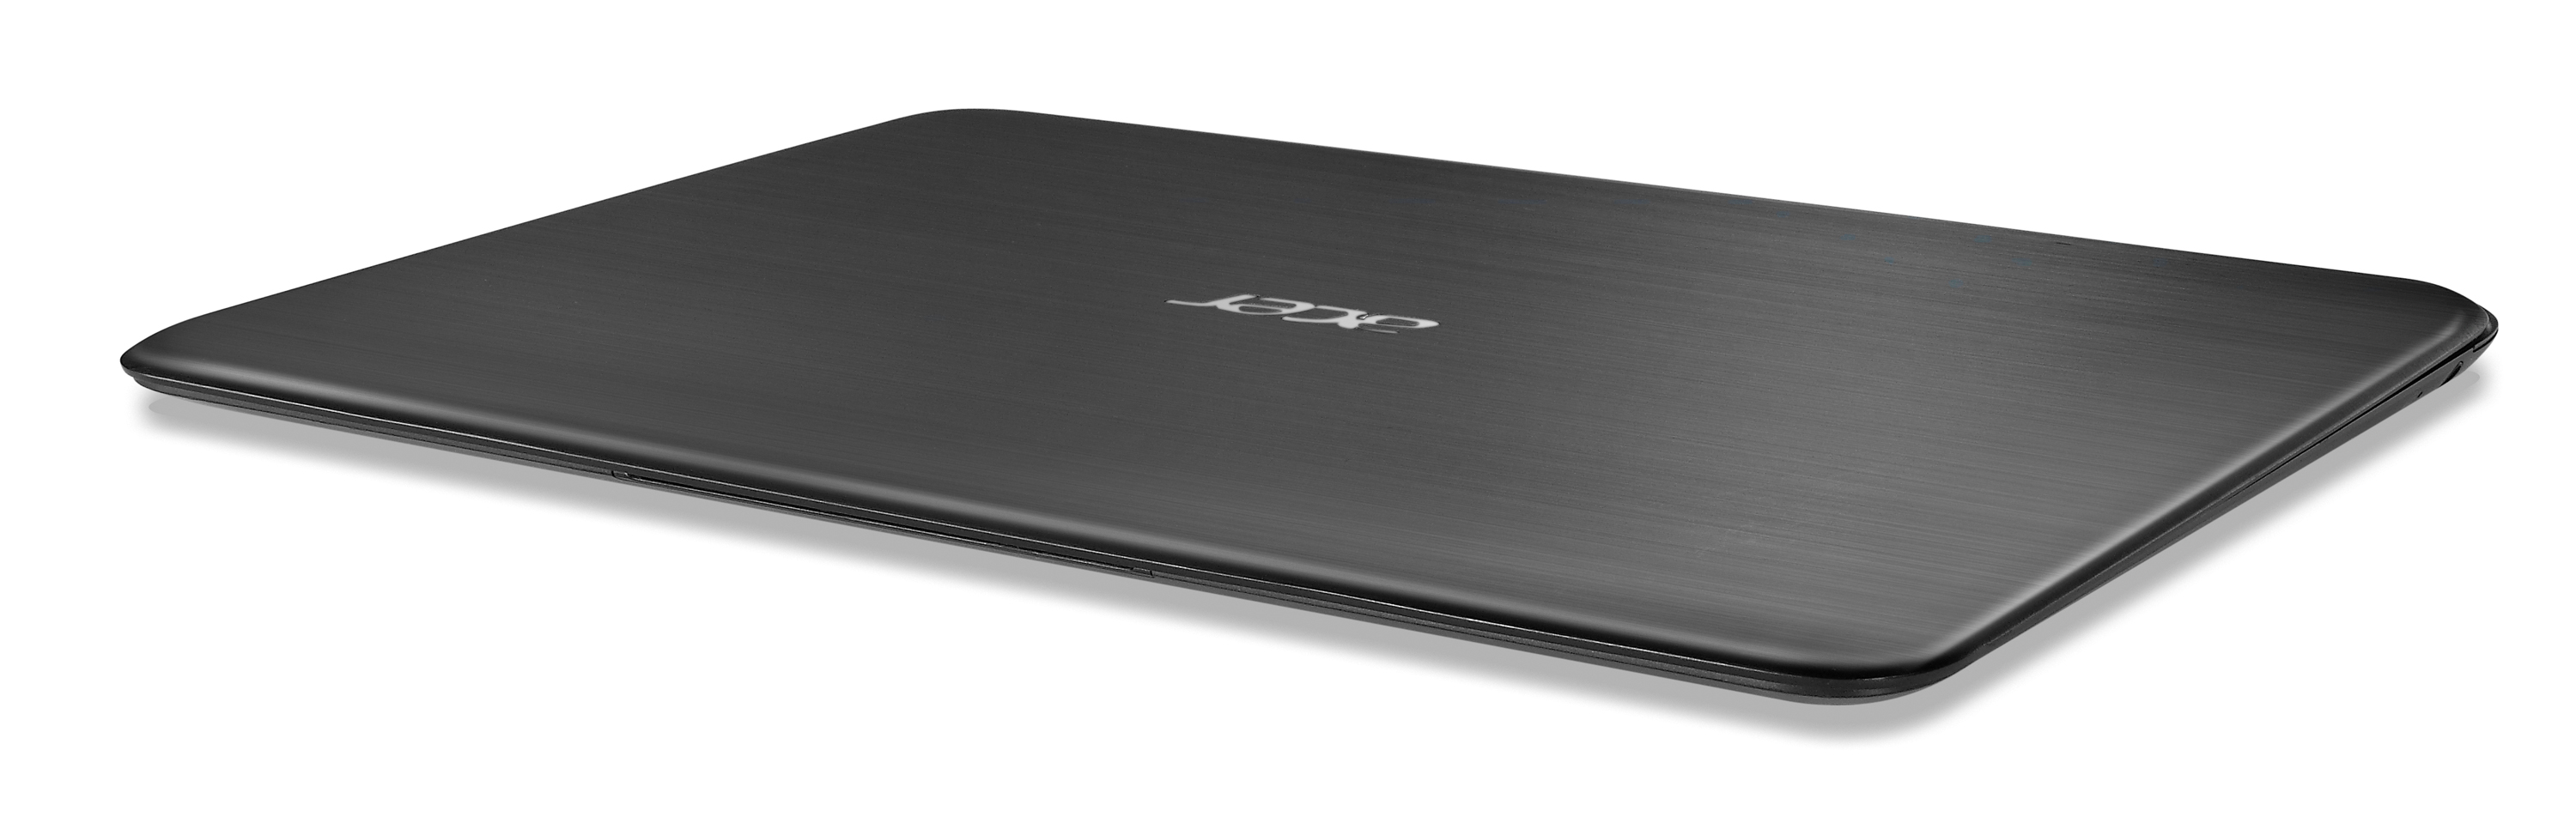 Acer lança ultrabook Aspire S5 no Brasil